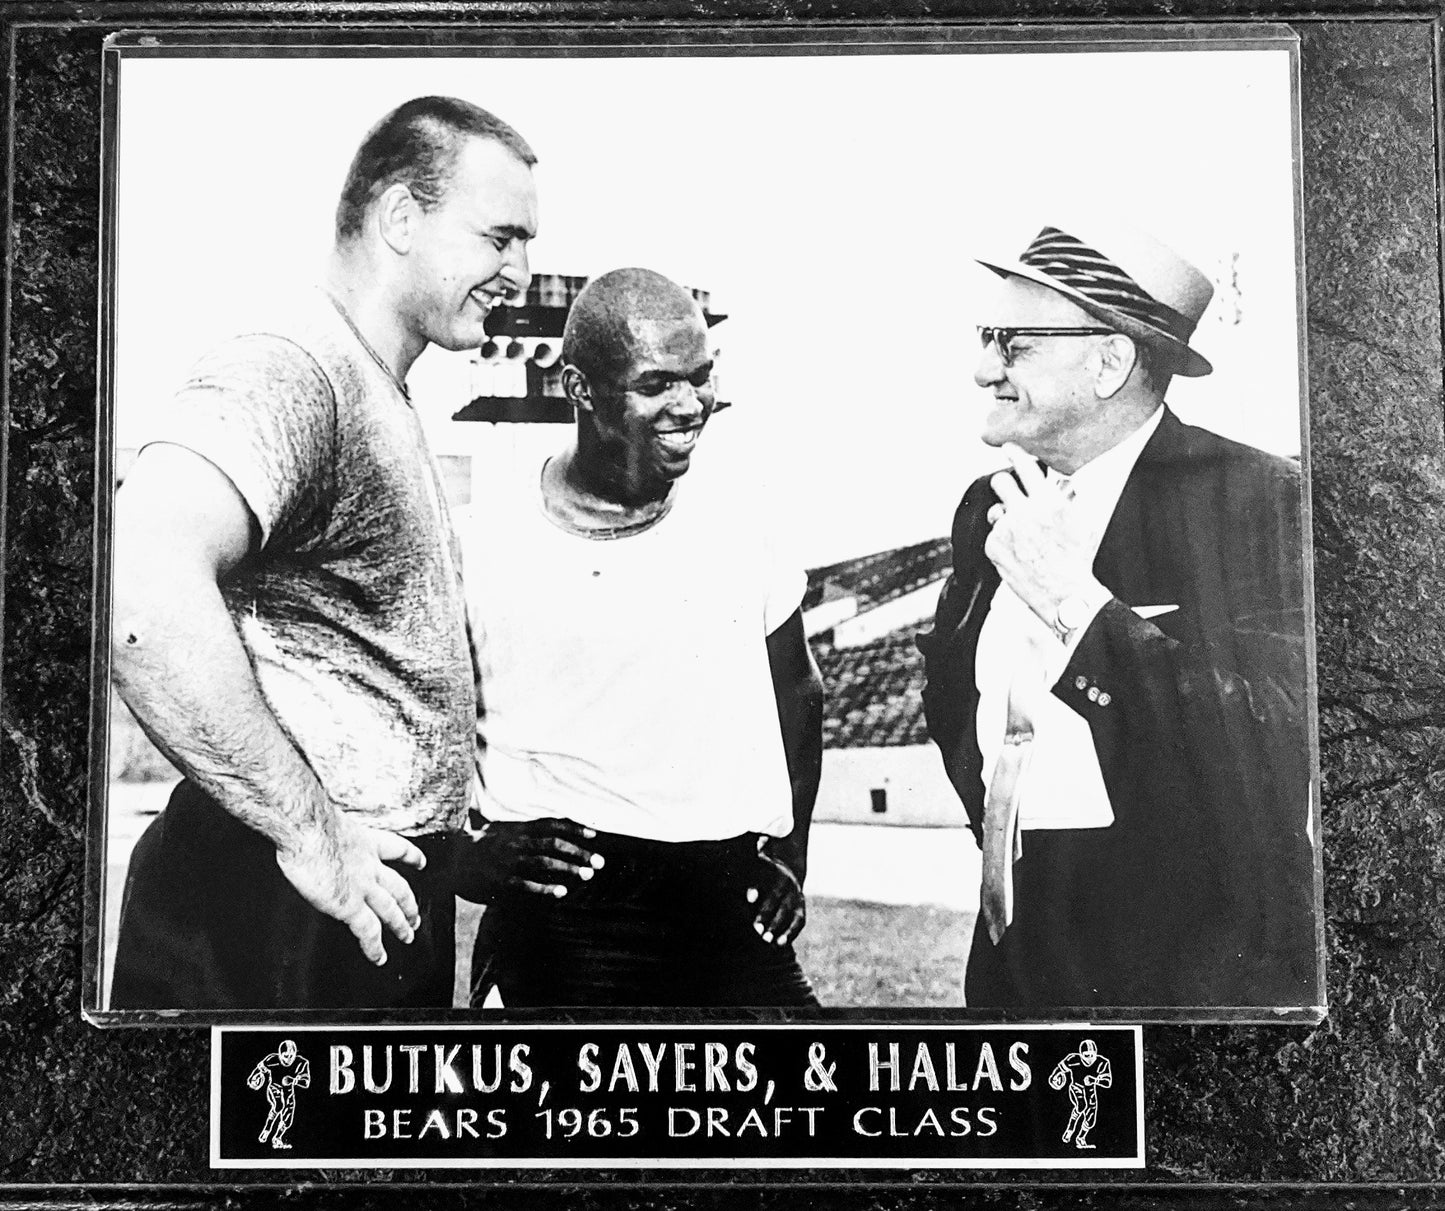 Chicago Bears Butkus, Sayers, and Halas "1965 Draft Class Plaque"